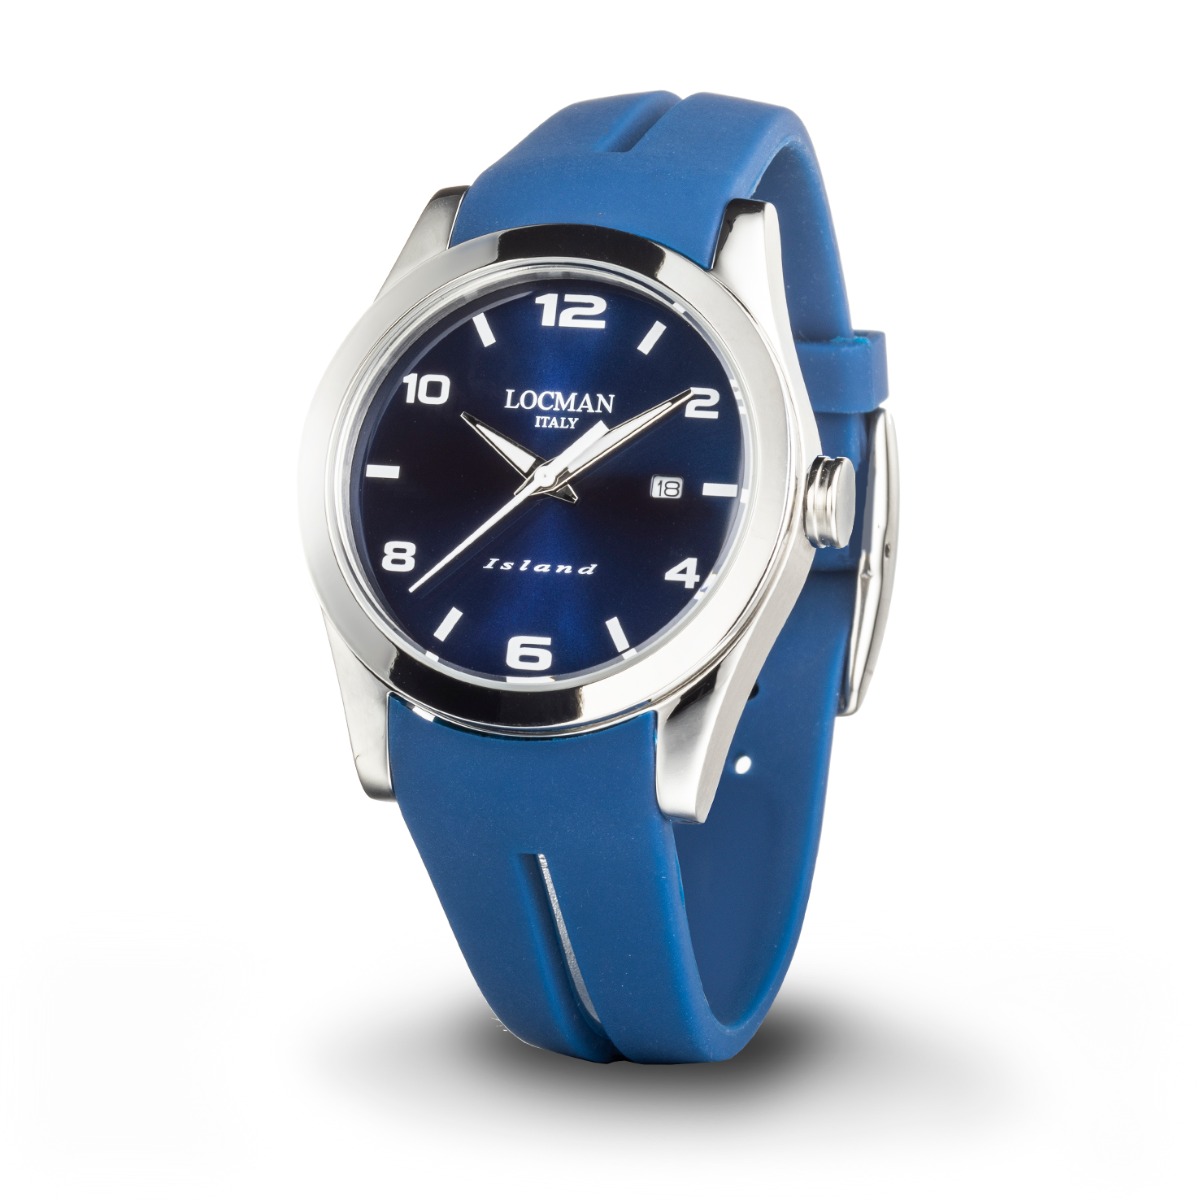 Locman Island / men's watch / blue dial / steel and titanium case / blue silicone strap